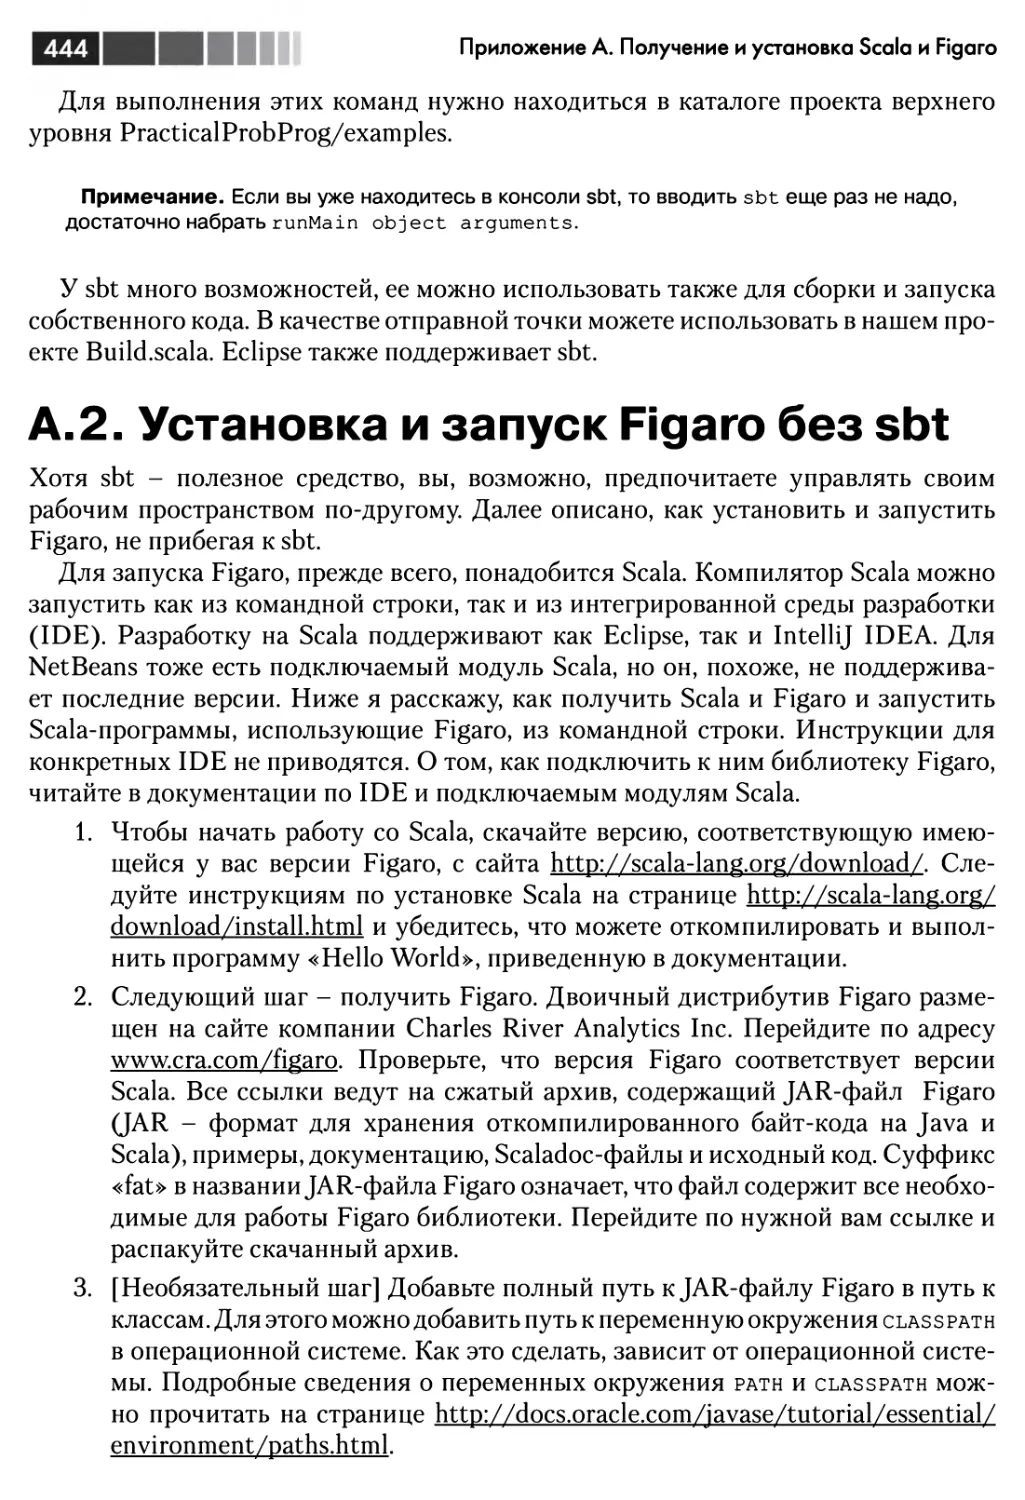 А.2. Установка и запуск Figaro без sbt